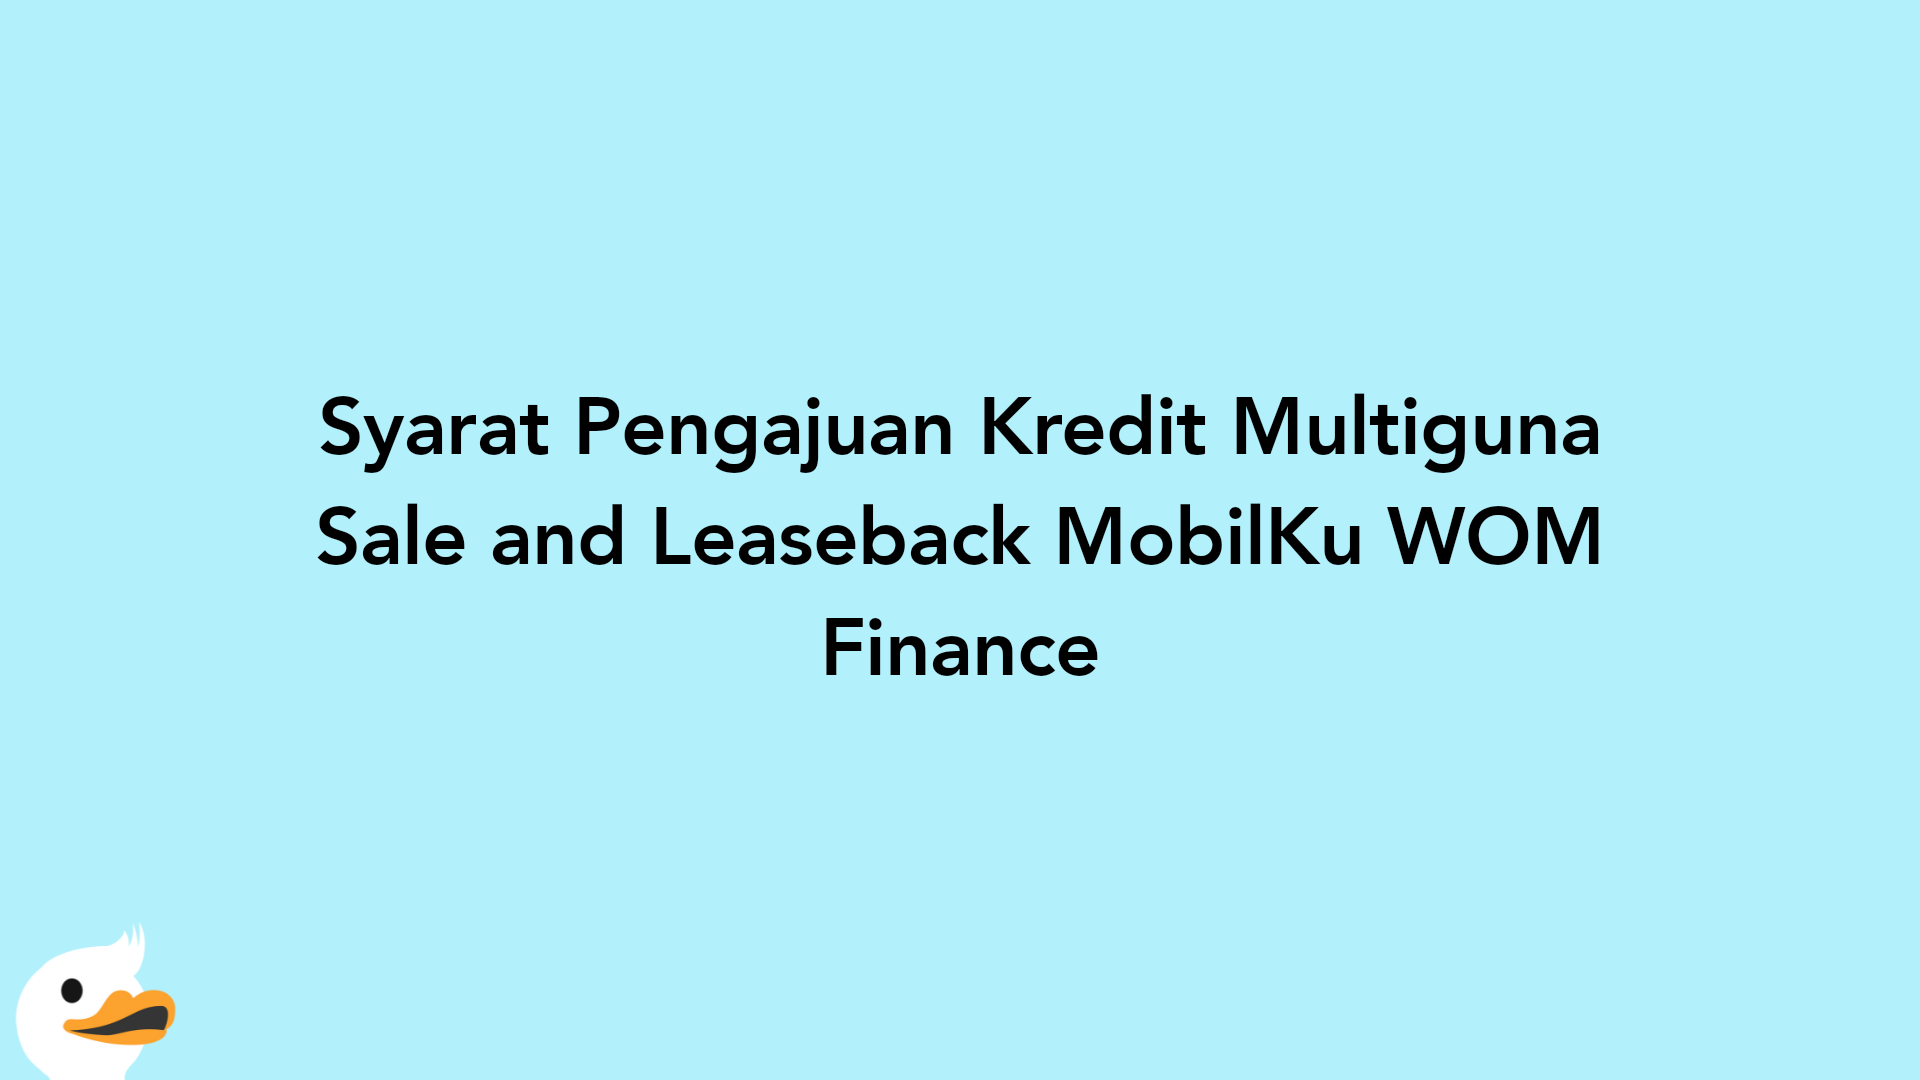 Syarat Pengajuan Kredit Multiguna Sale and Leaseback MobilKu WOM Finance